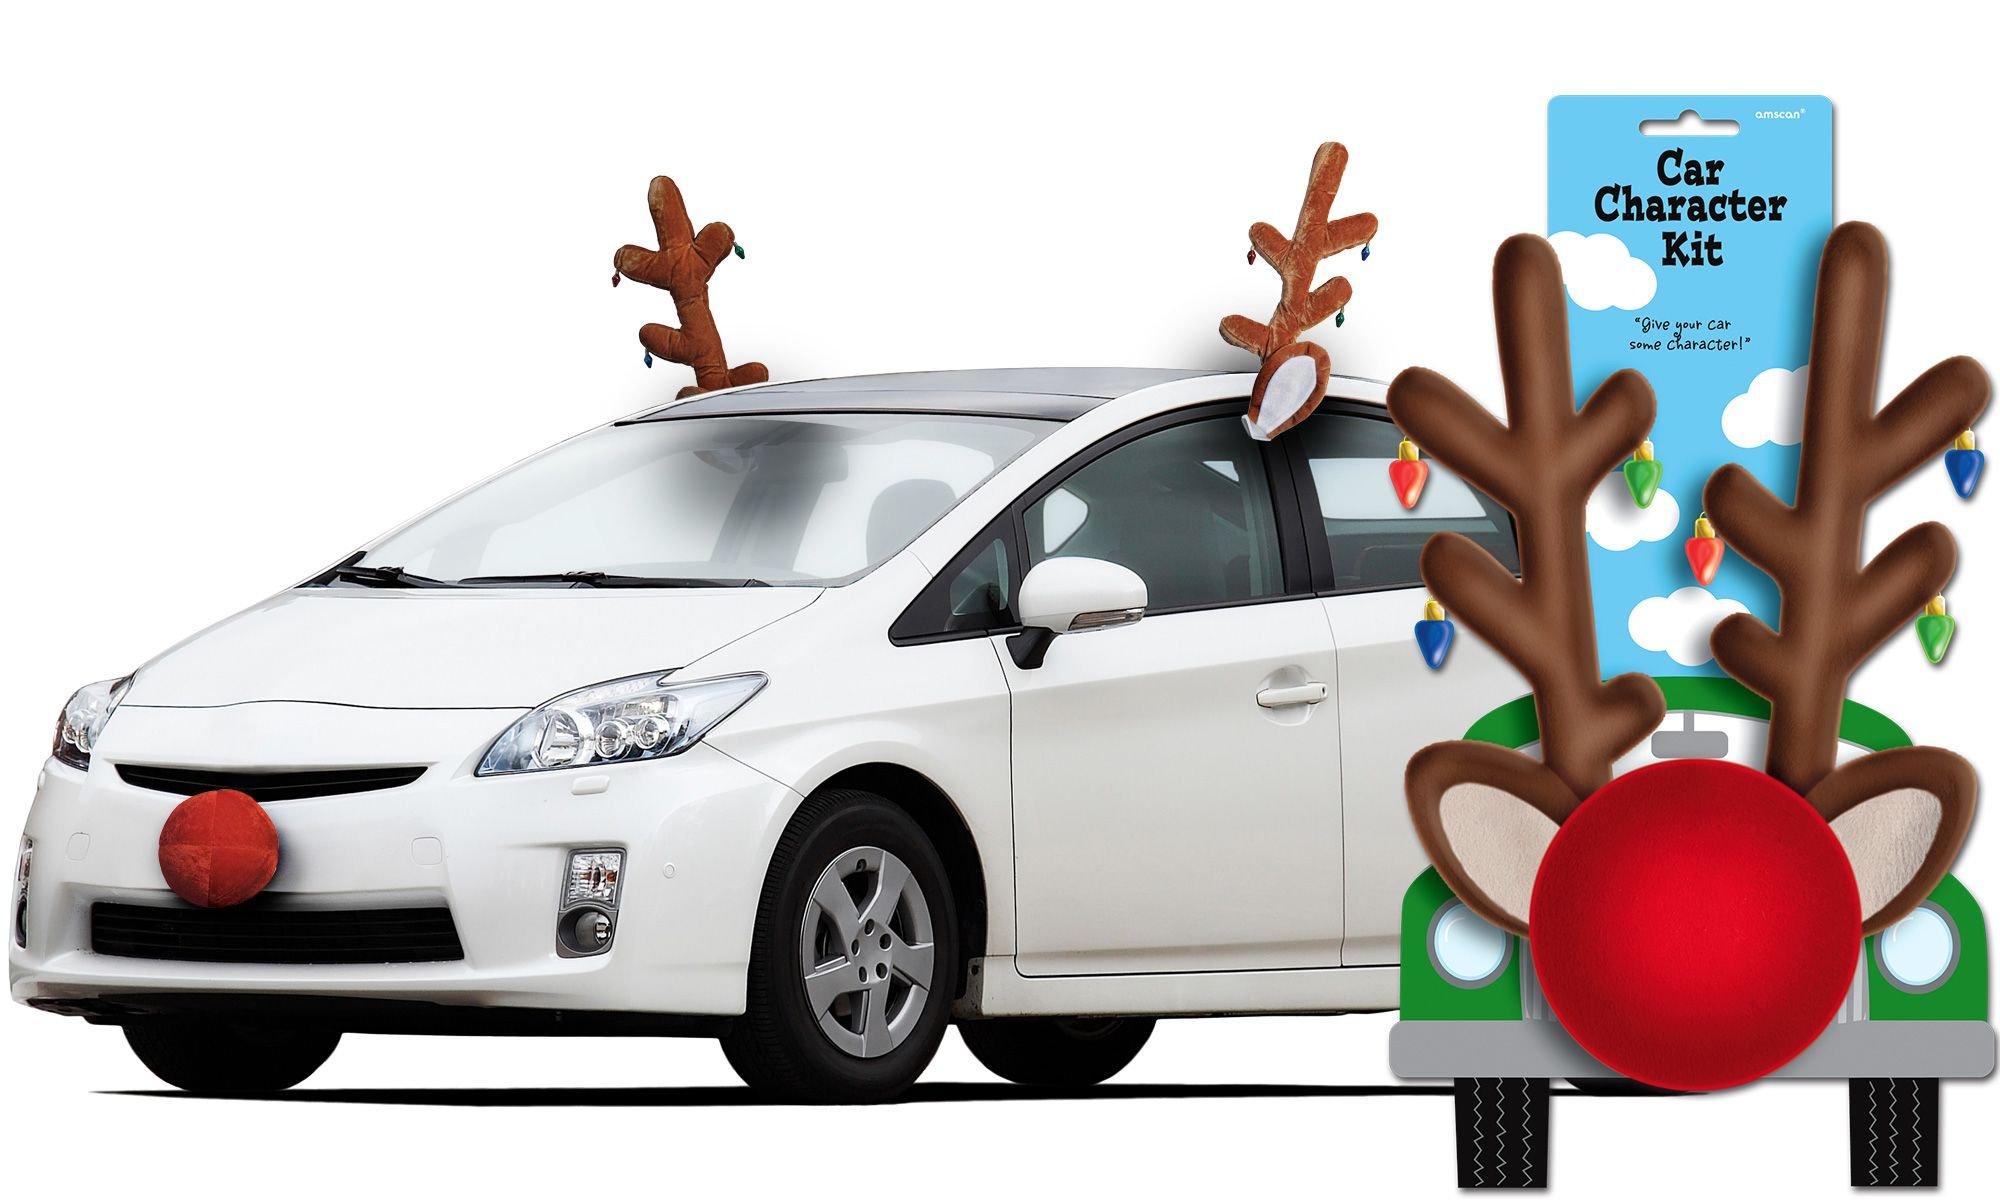 Car Reindeer Antler Decorations,Vehicle Xmas Decorations Auto